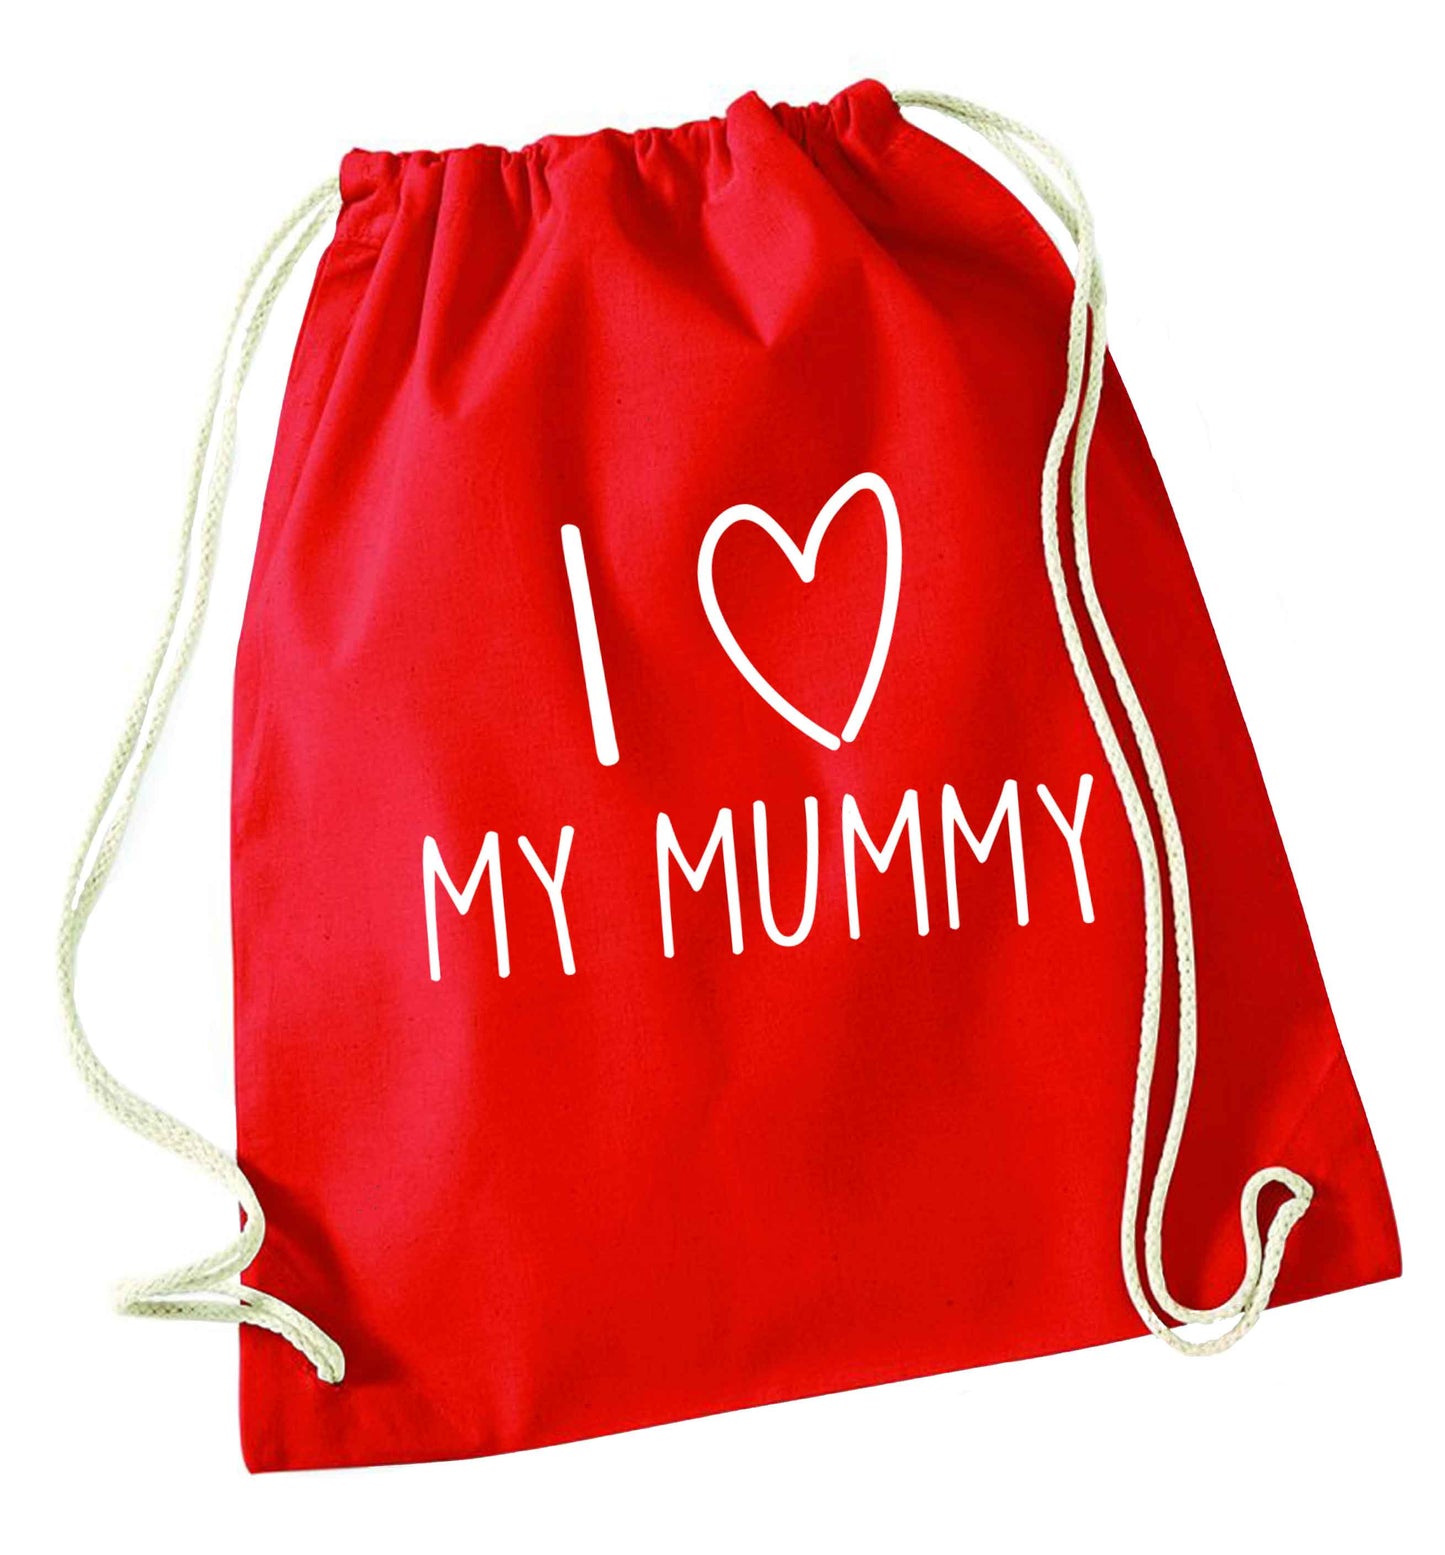 I love my mummy red drawstring bag 